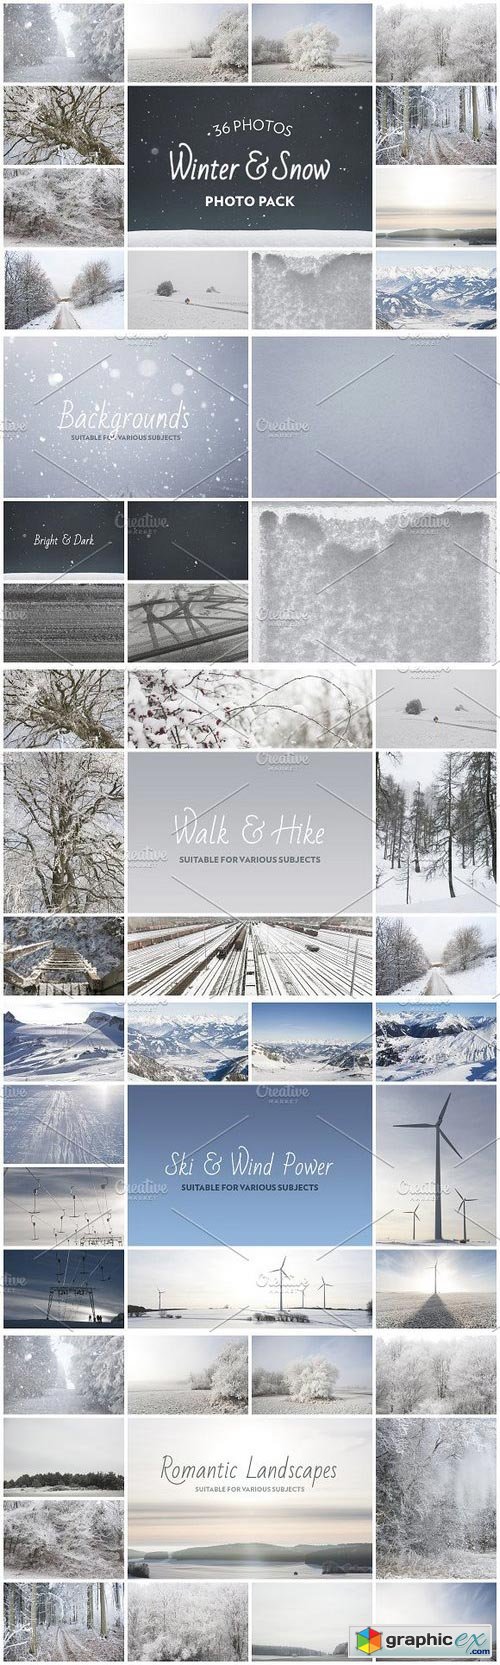 Winter & Snow Photo Pack - 36 Photos